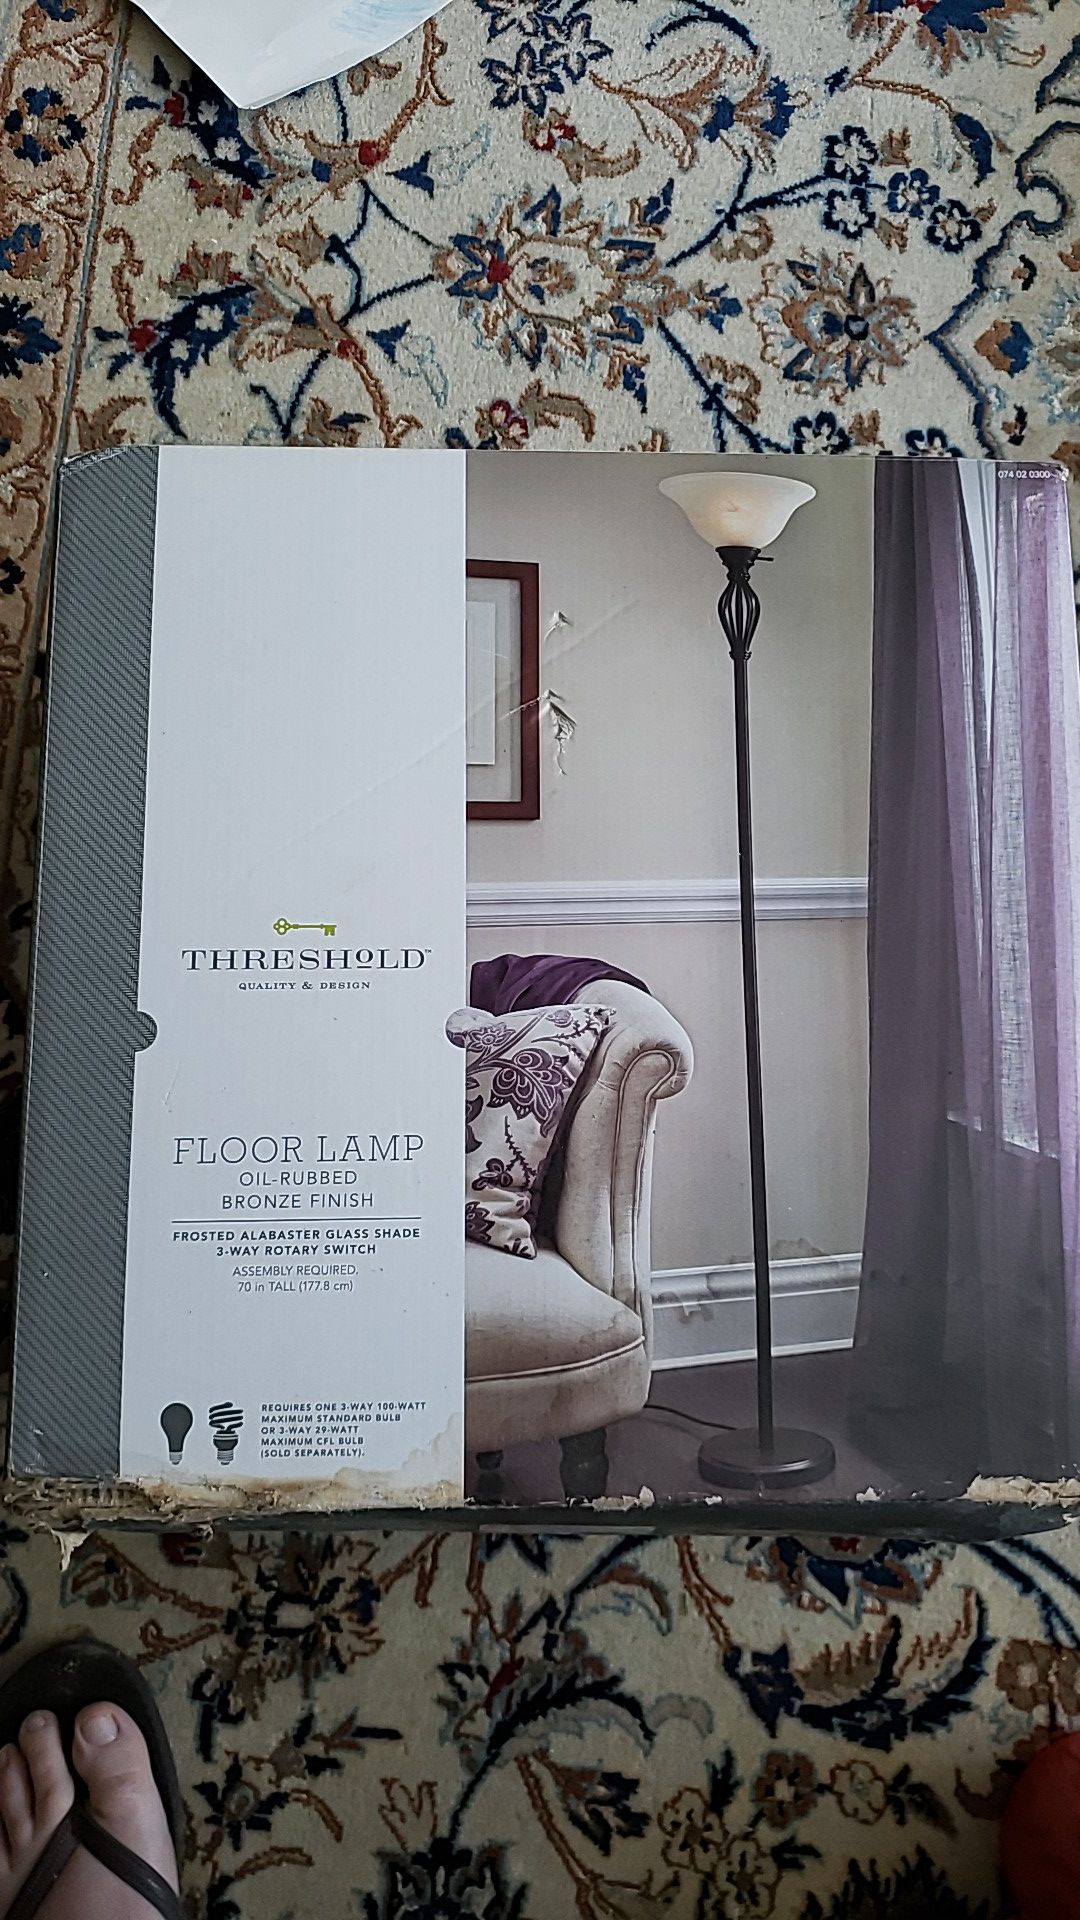 Brand new floor lamp in box